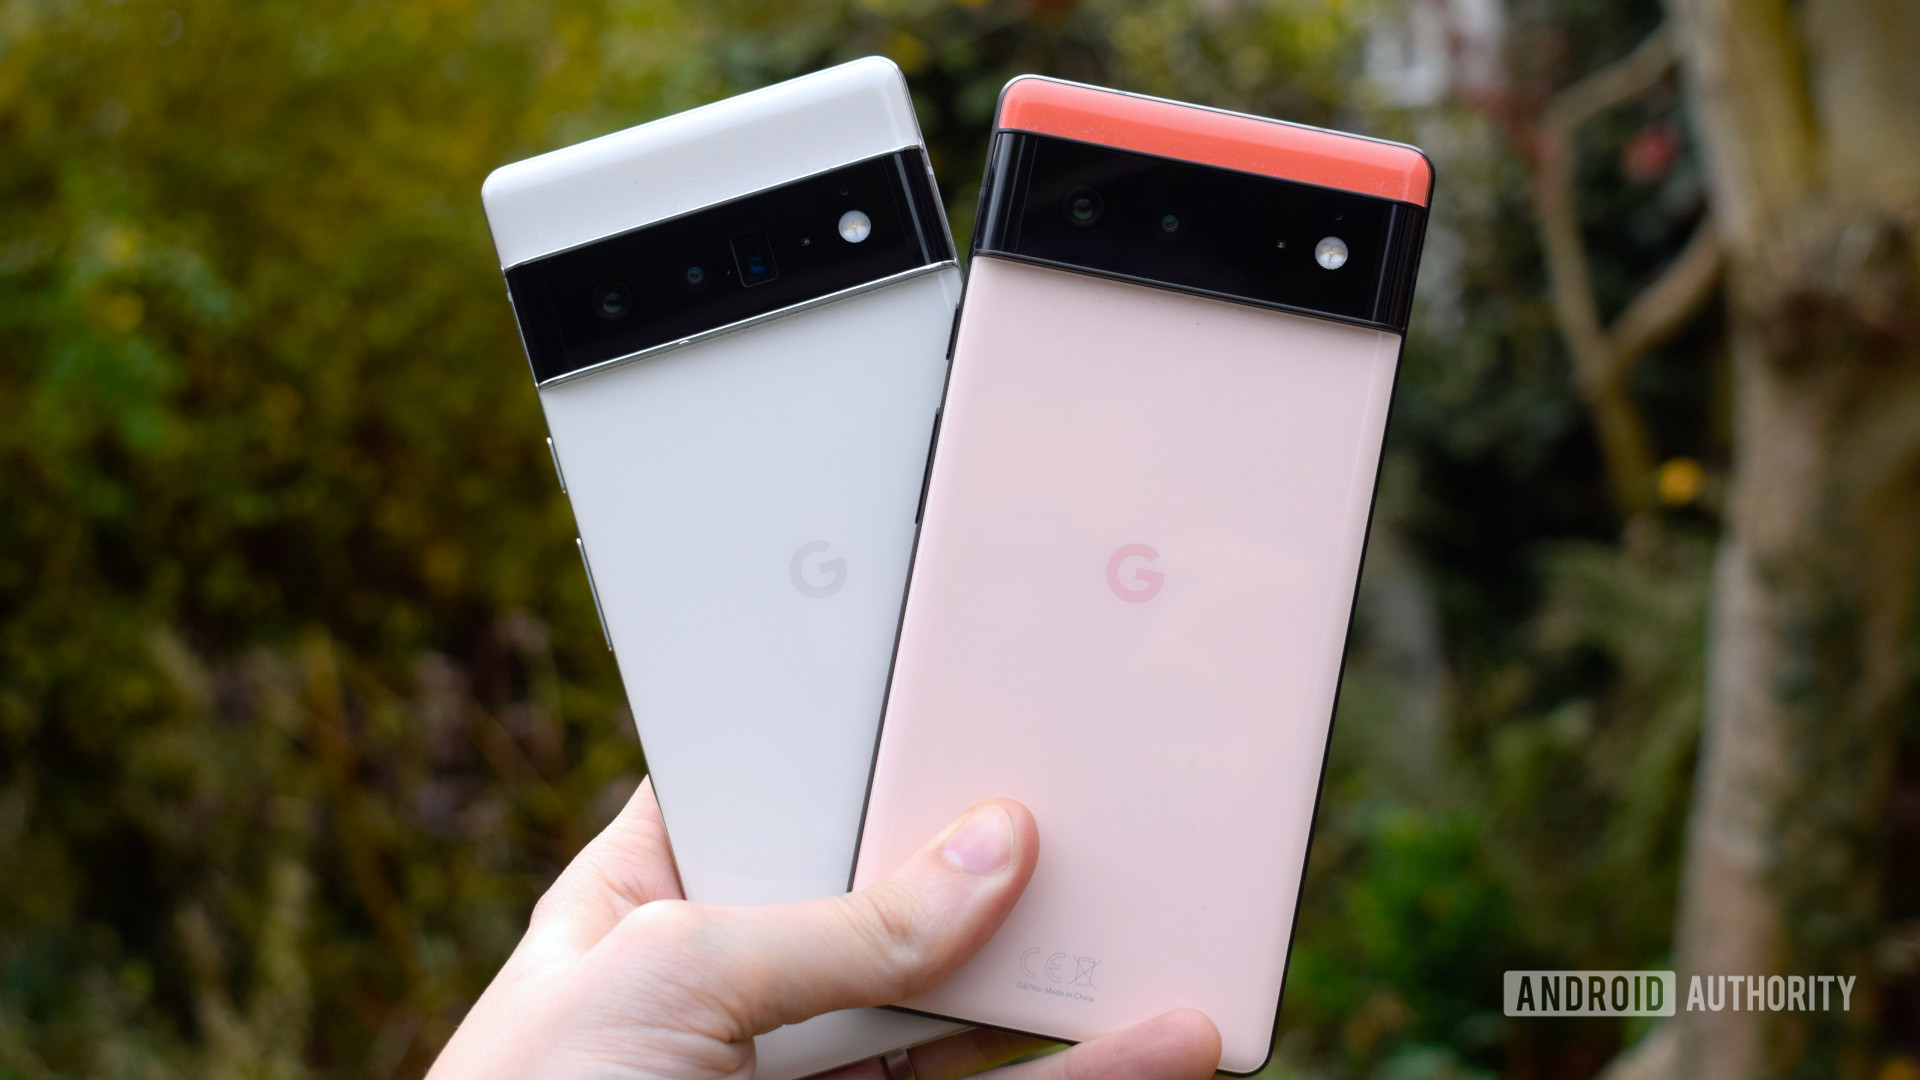 All Google Pixel phones released so far